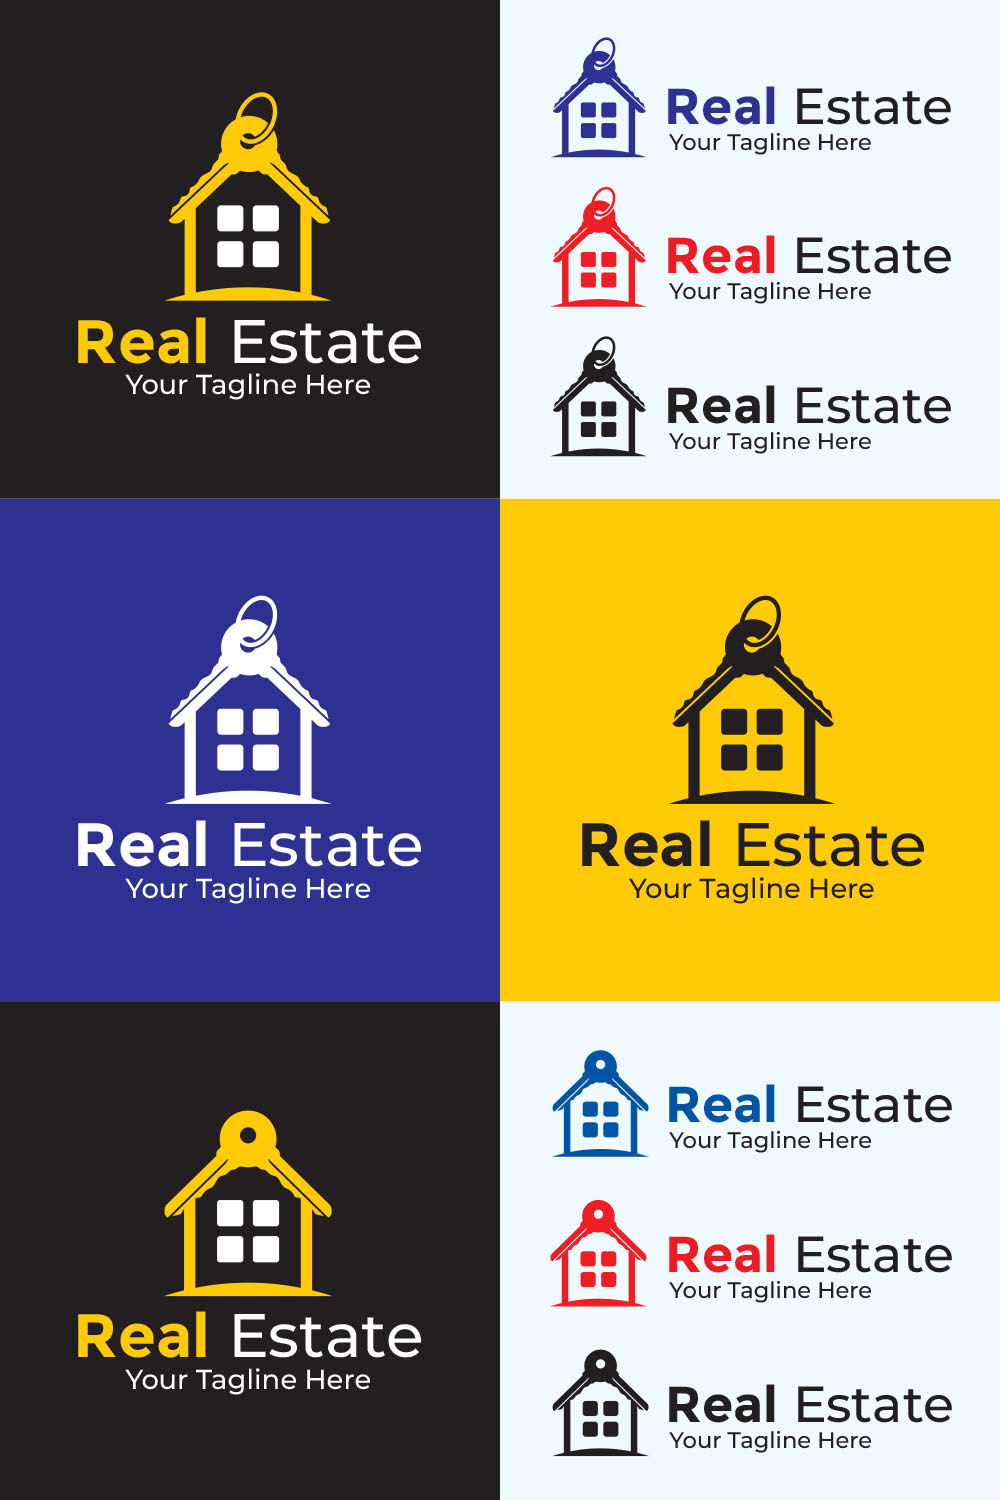 Real Estate Logo House with Key Design pinterest image.